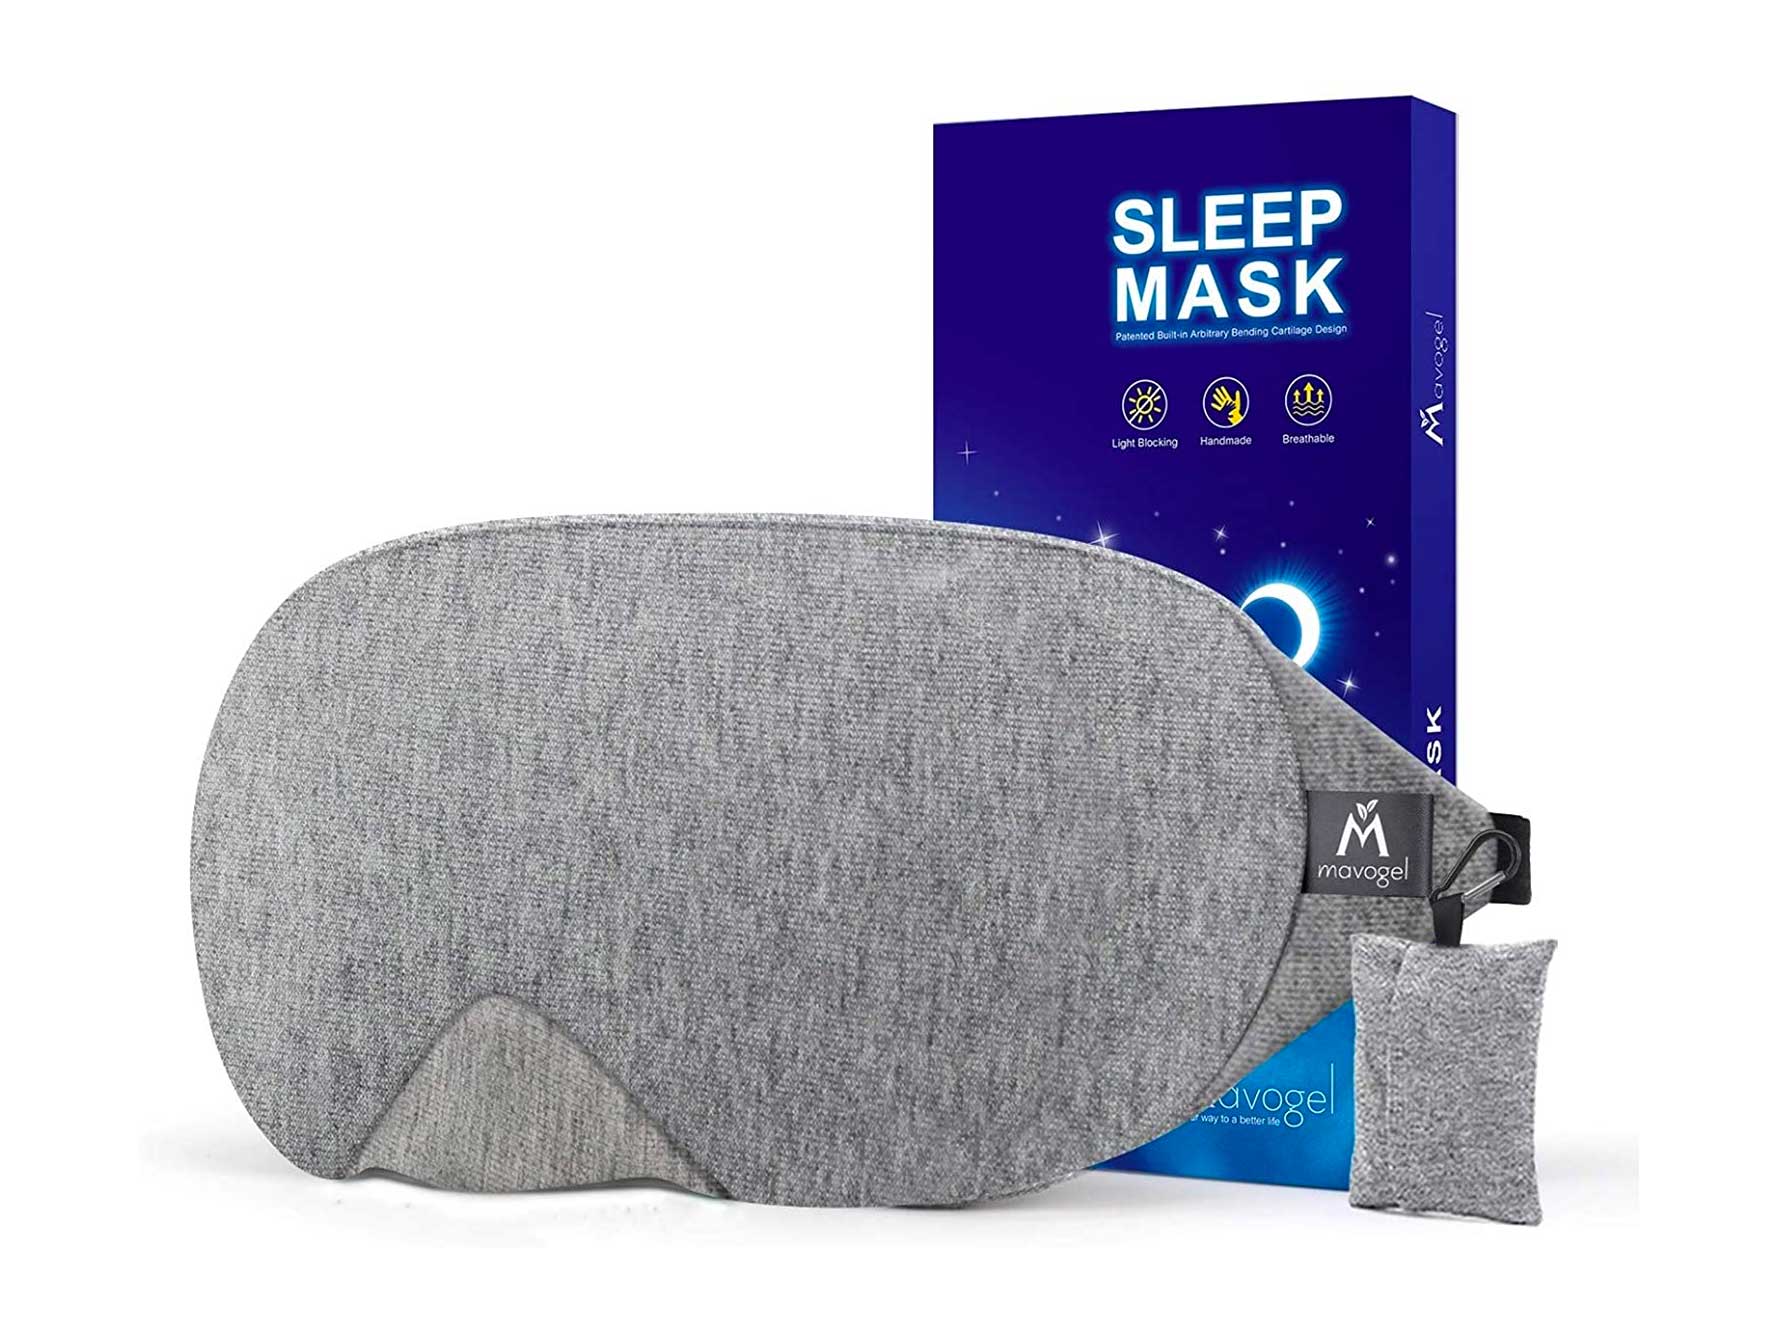 Mavogel Cotton Sleep Eye Mask - Updated Design Light Blocking Sleep Mask, Soft and Comfortable Night Eye Mask for Men Women, Eye Blinder for Travel/Sleeping/Shift Work, Includes Travel Pouch, Grey